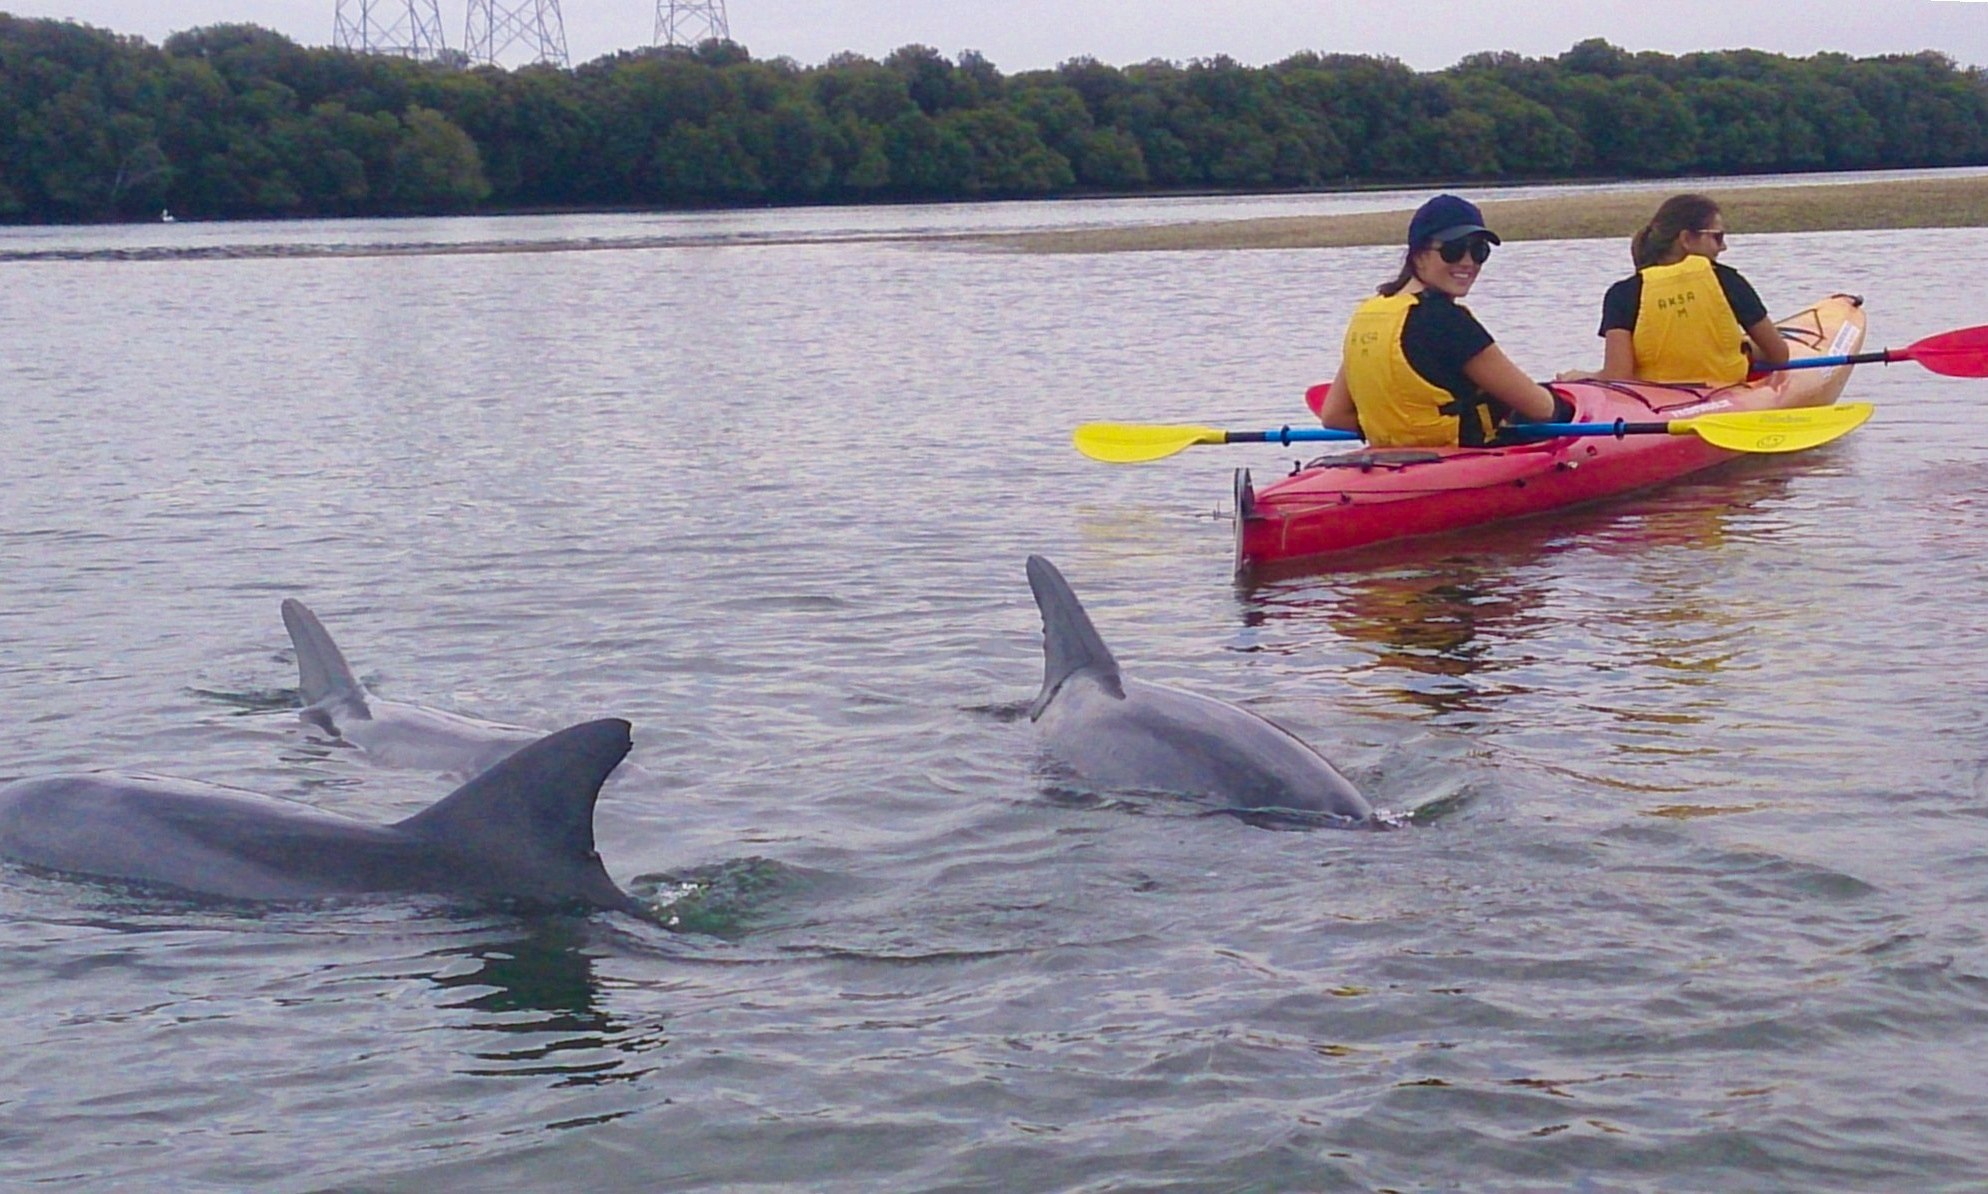 dolphin tours adelaide